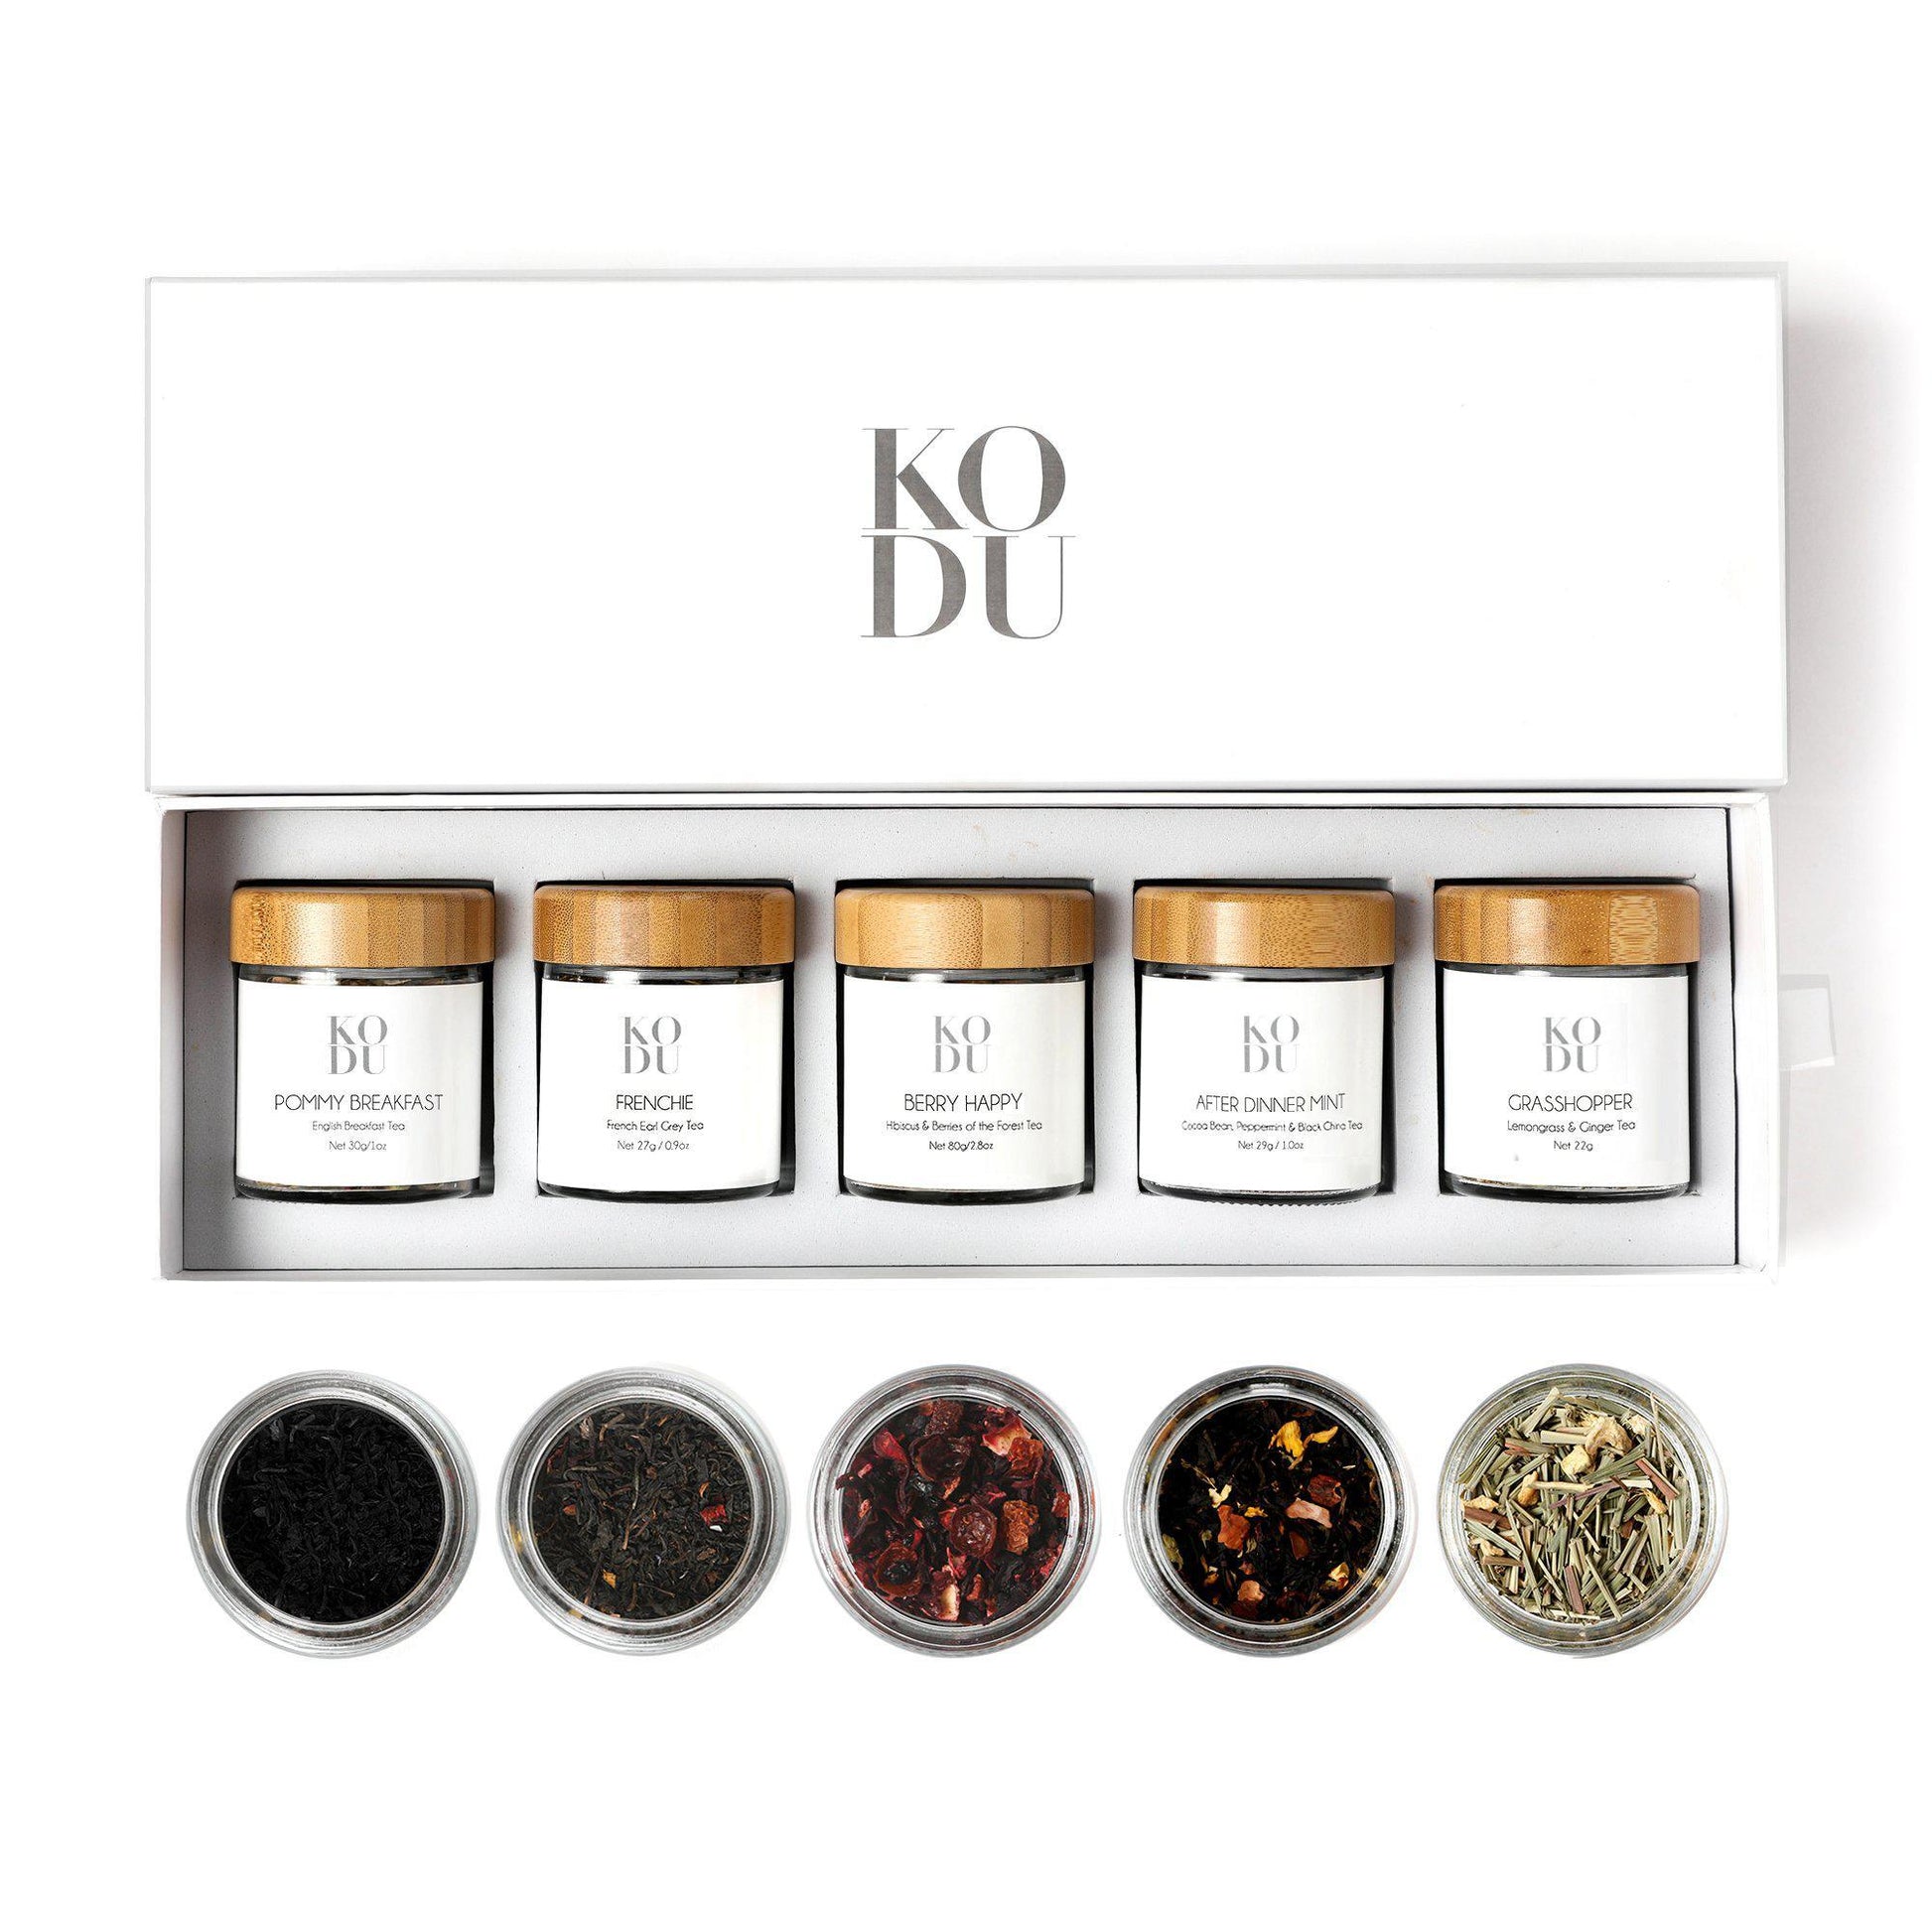 Kodu High Tea Gift Set - Gourmet Loose Leaf - mykodu